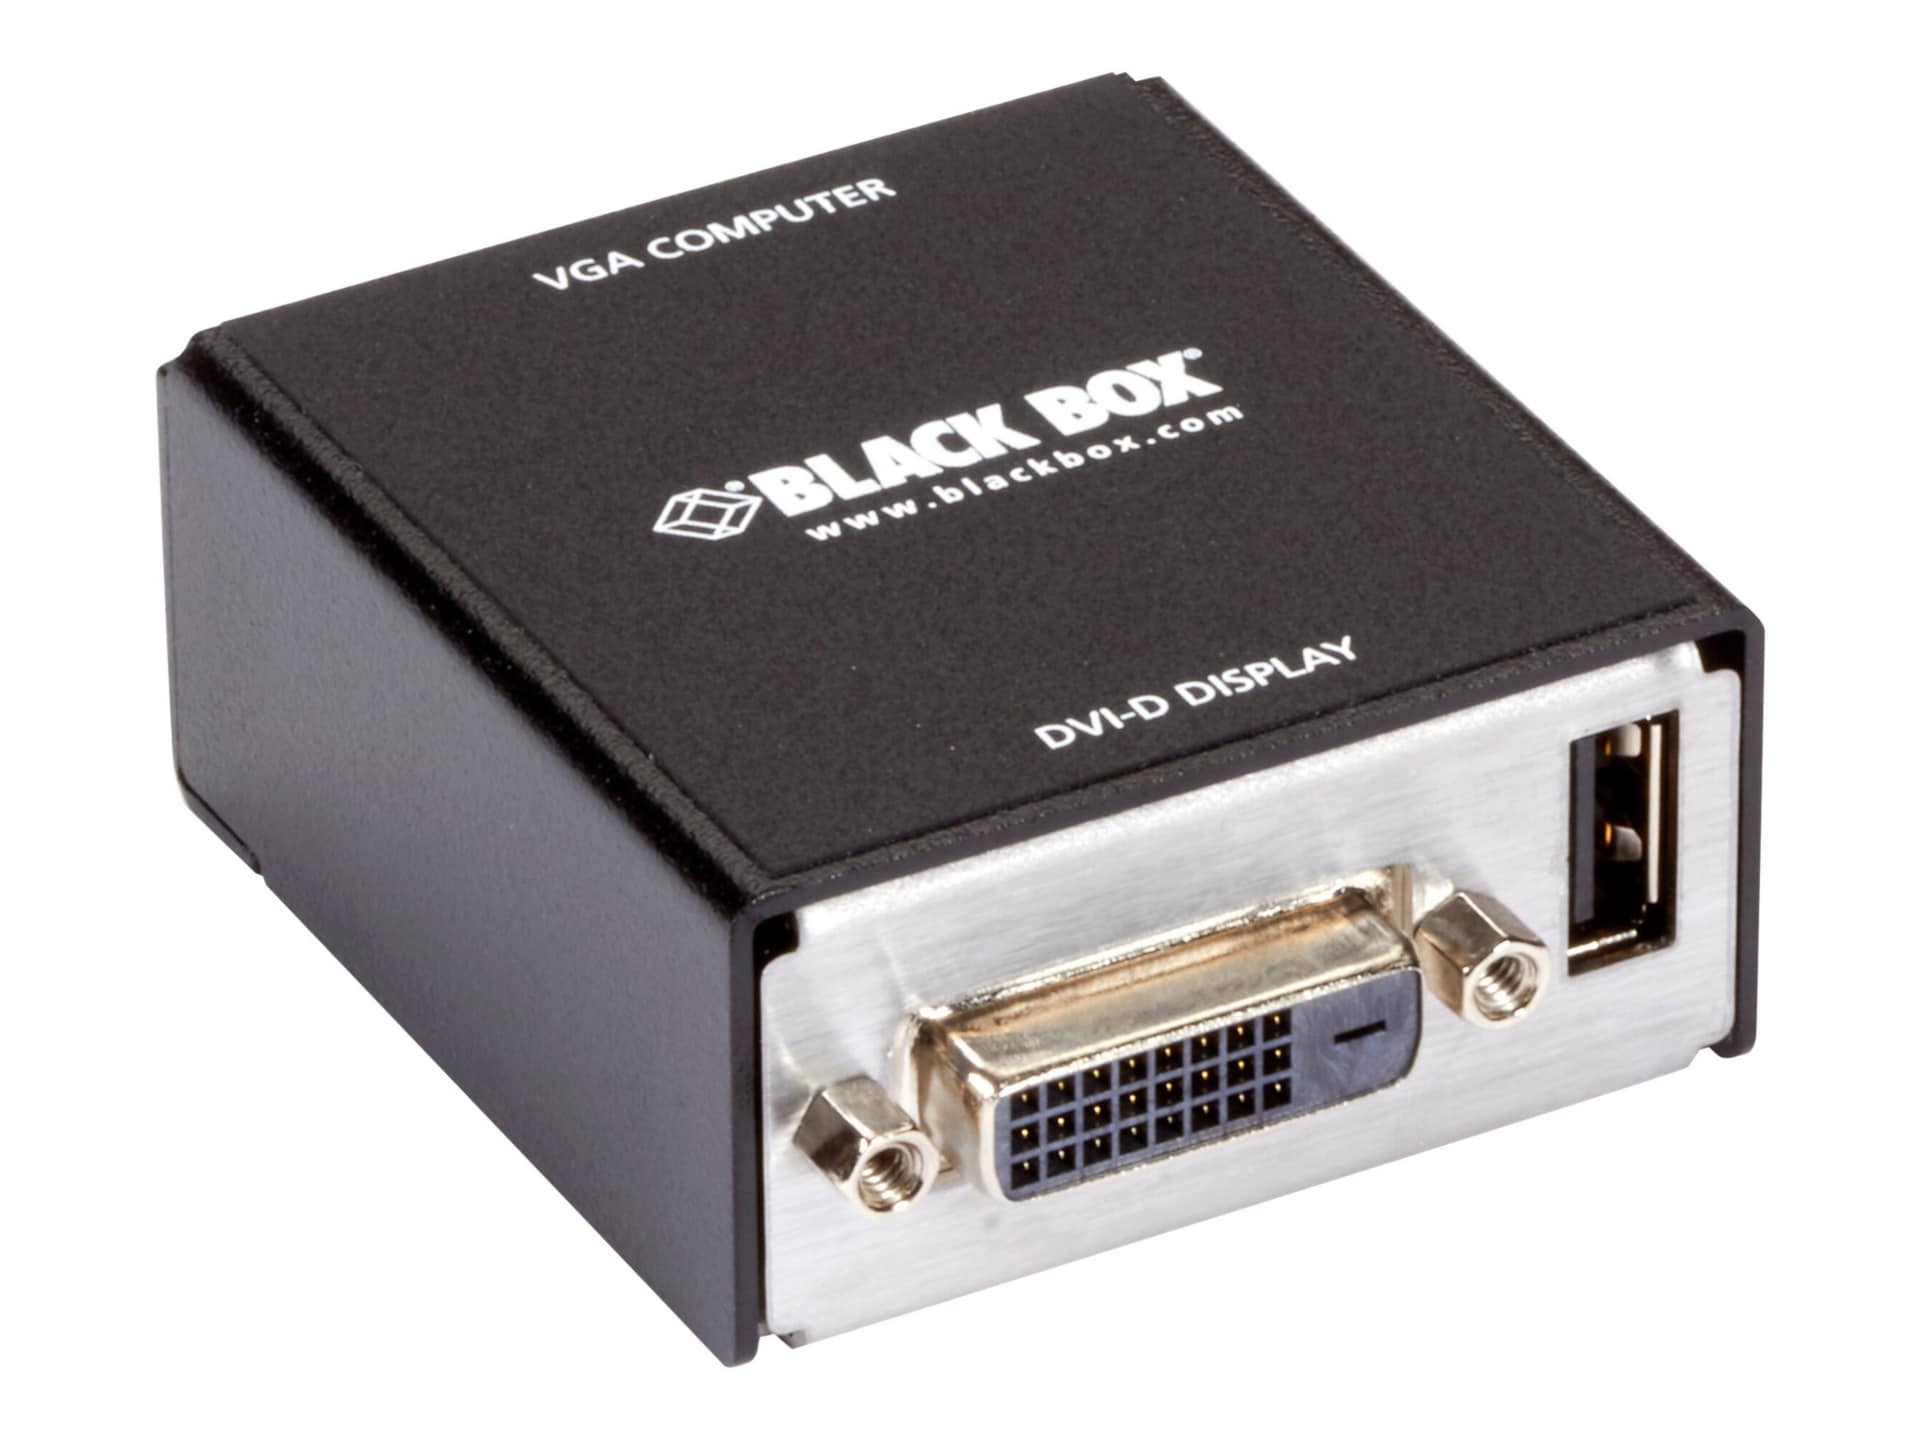 Black Box VGA to DVI-D Video Converter - USB Powered - video converter - TAA Compliant